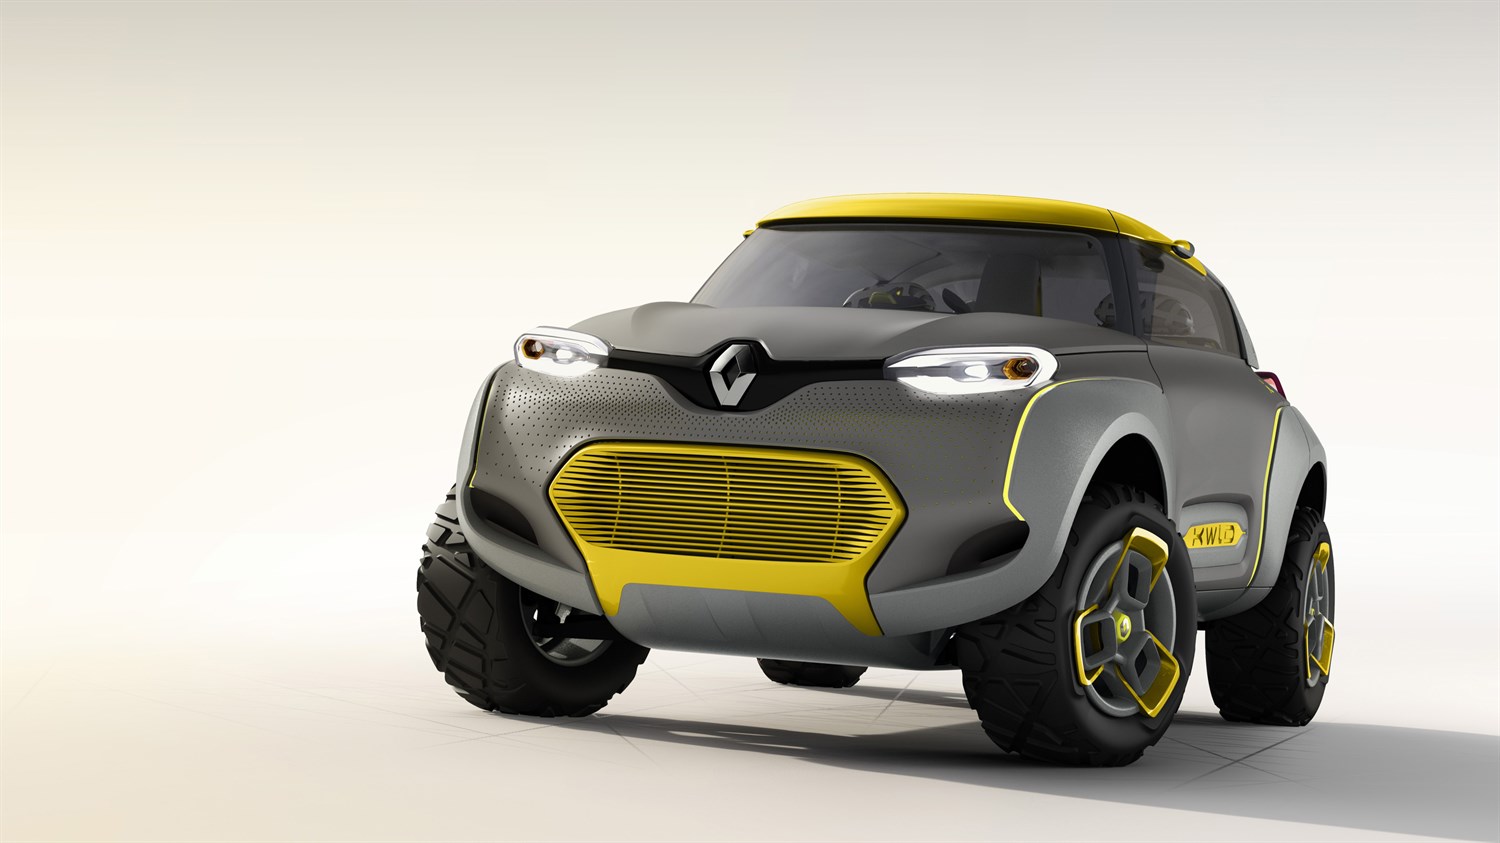 Renault KWID concept car exterior design front view